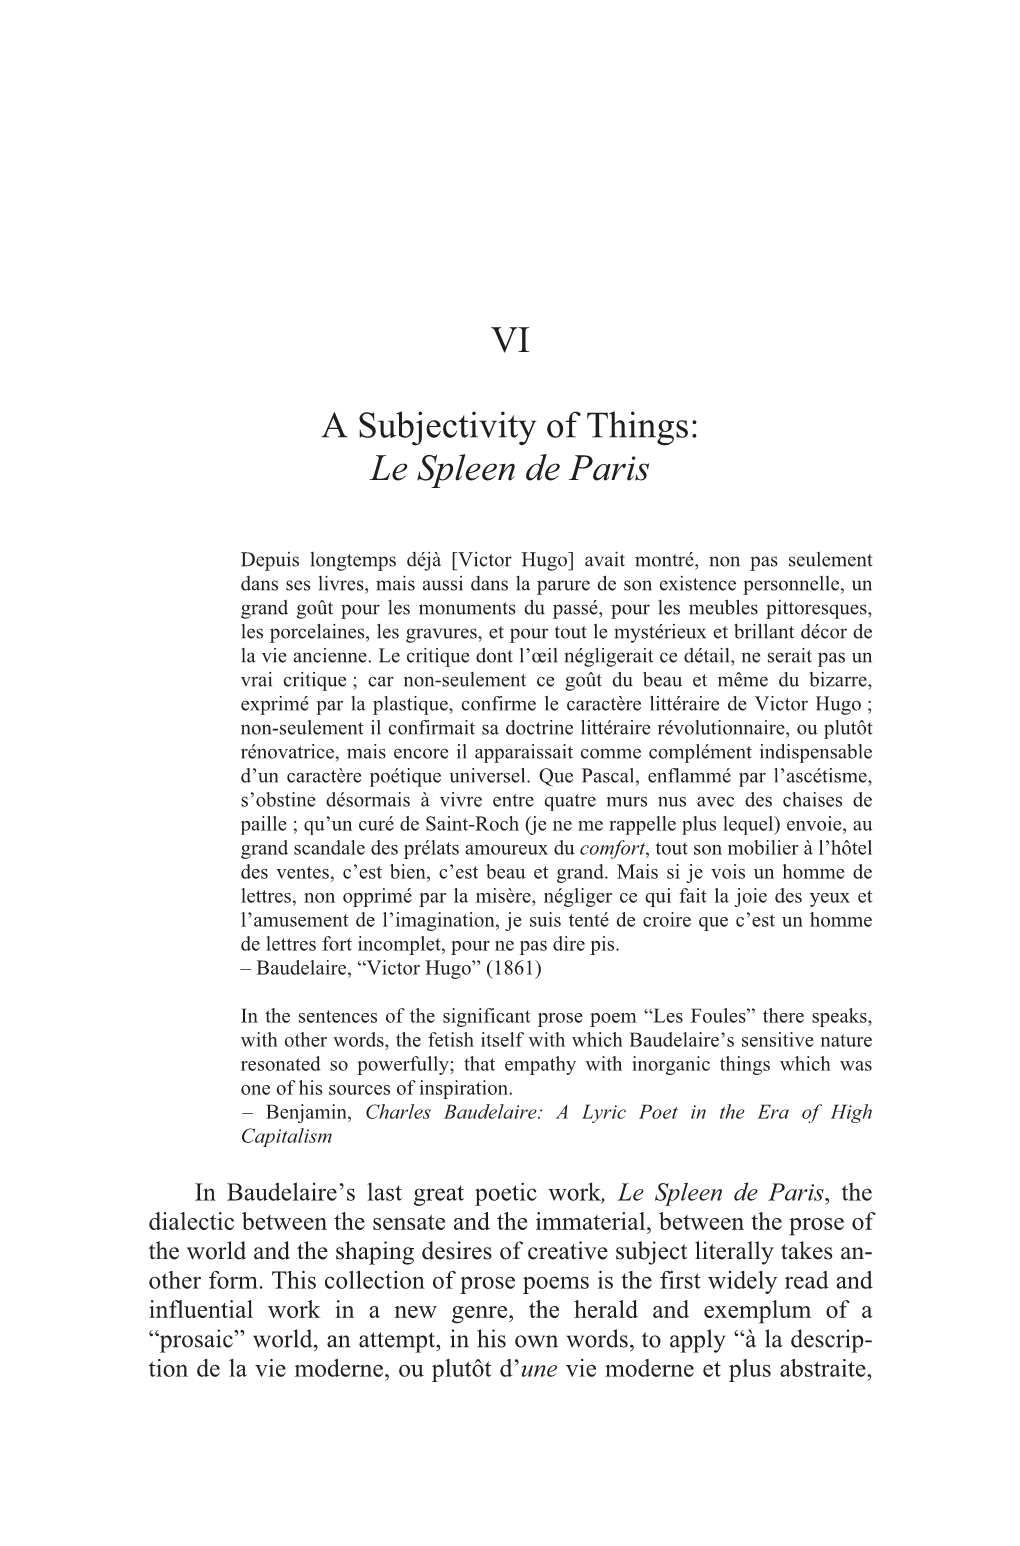 VI a Subjectivity of Things: Le Spleen De Paris